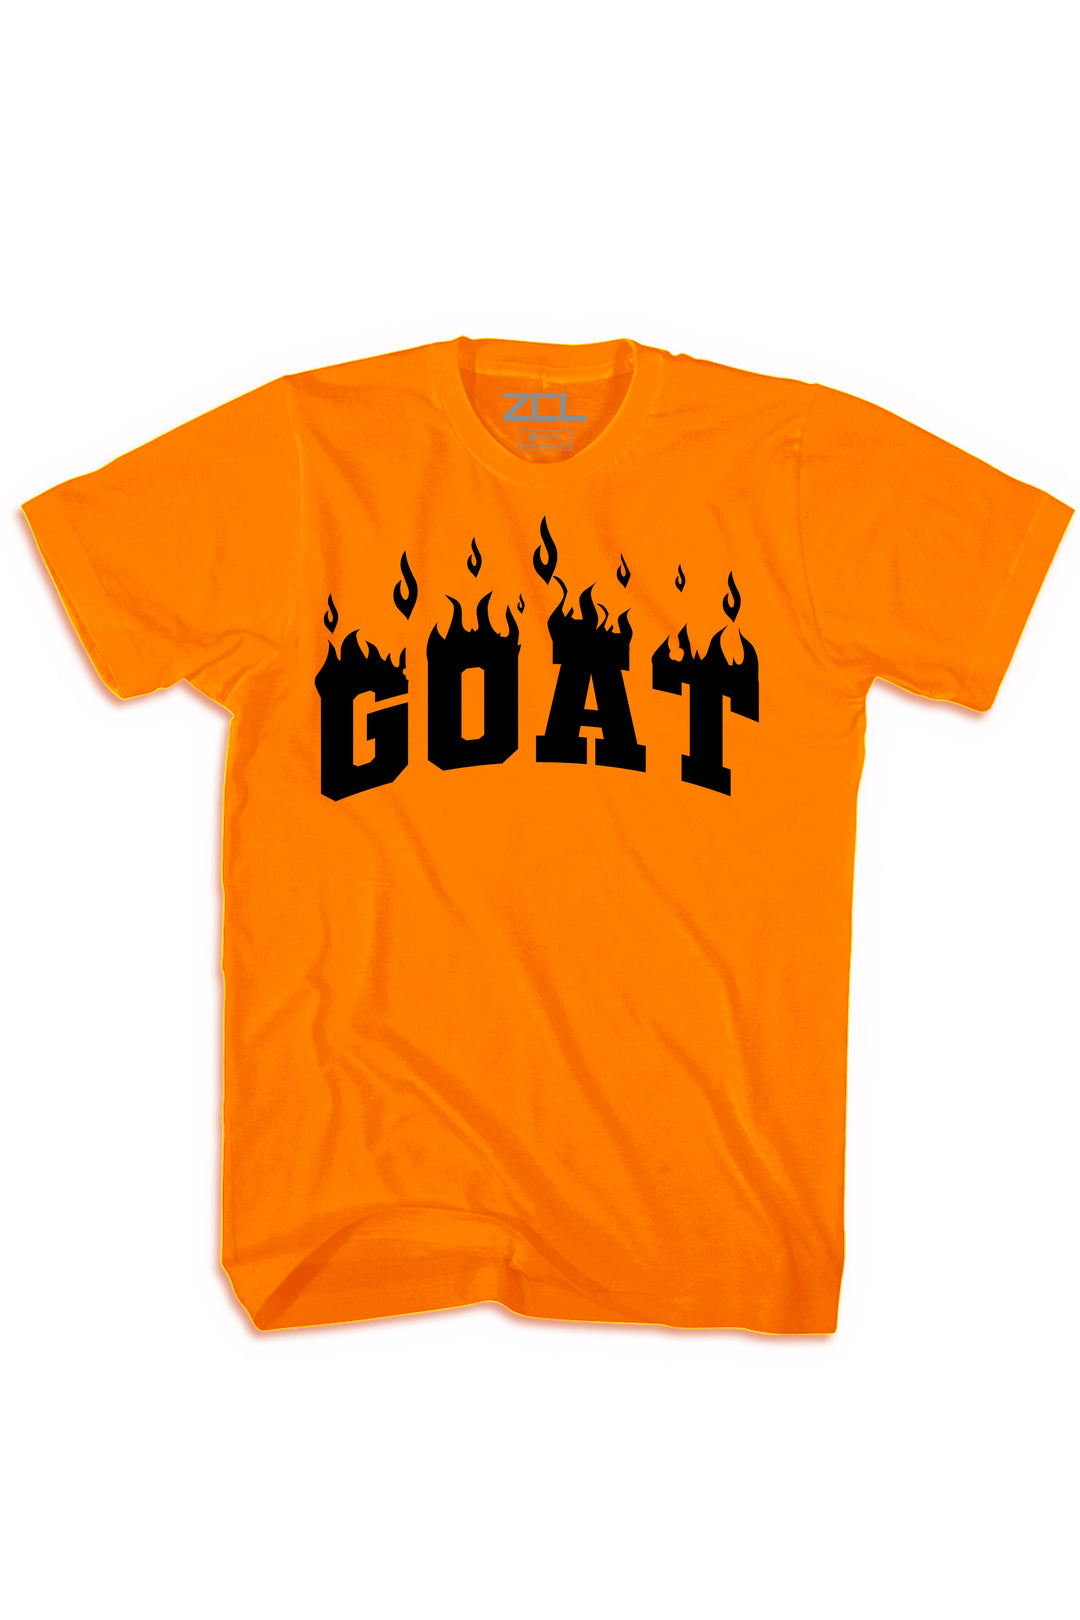 Goat Flame Tee (Black Logo) - Zamage